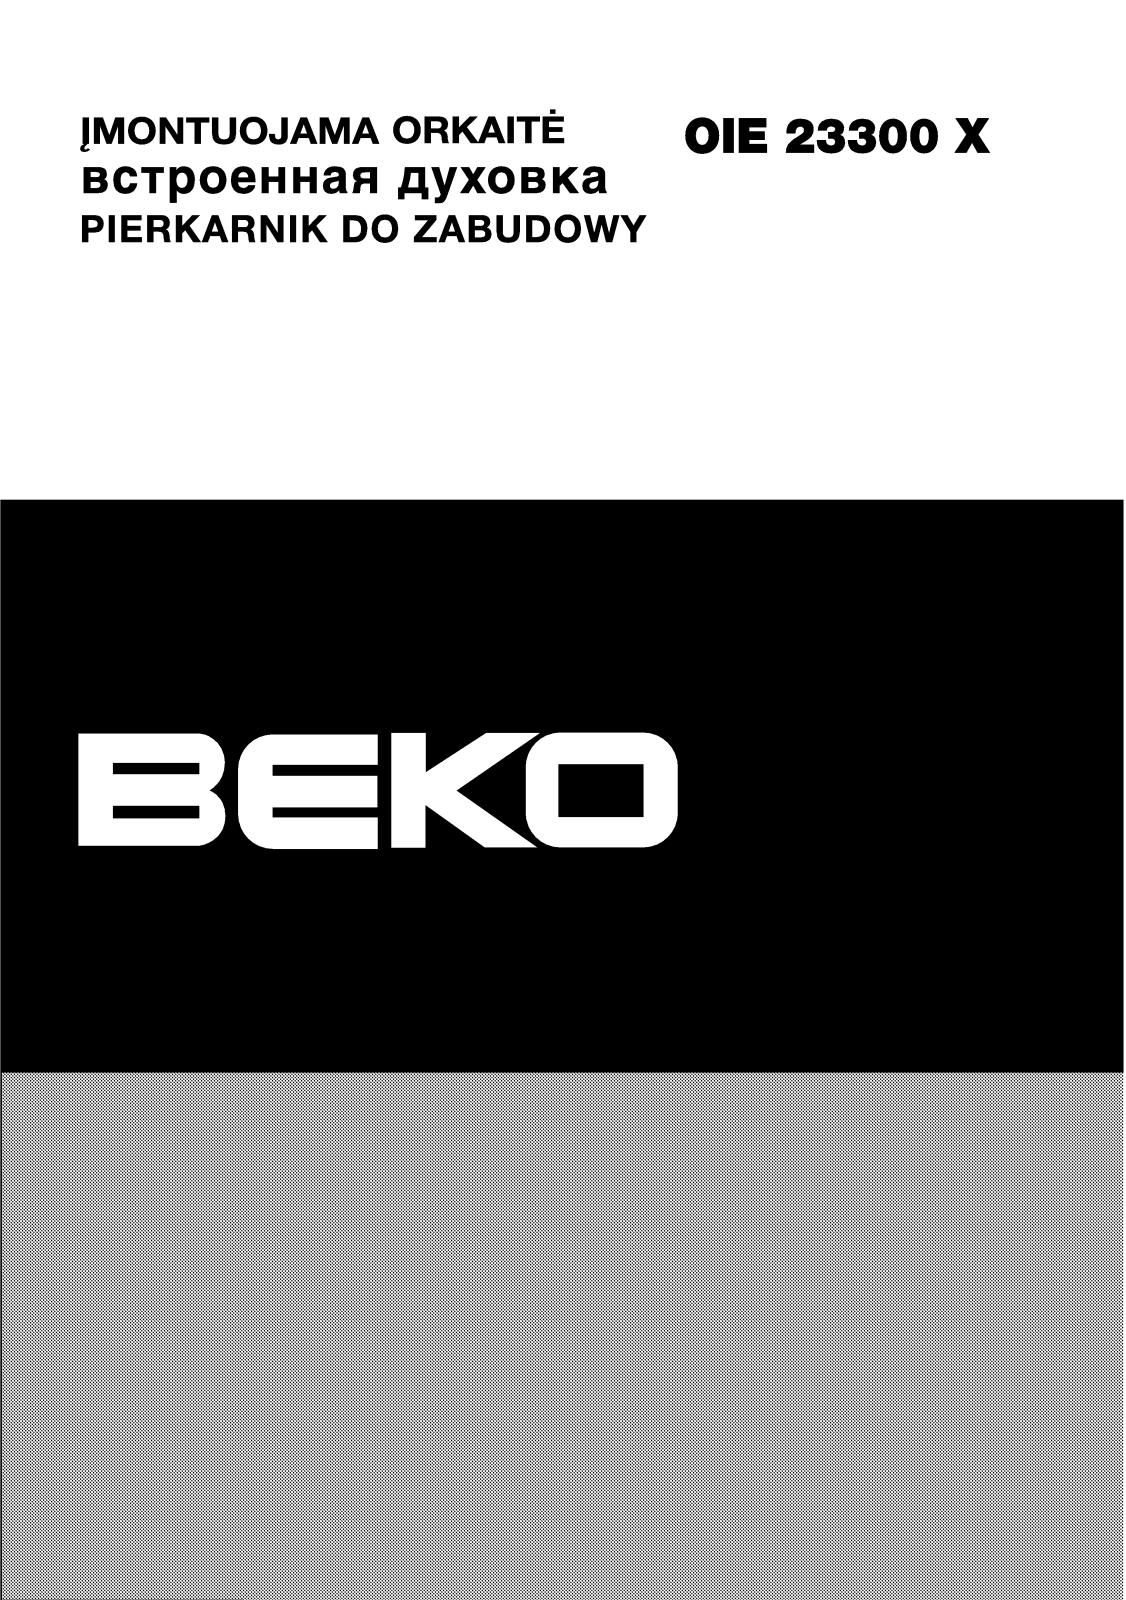 Beko OIE 23300 Manual